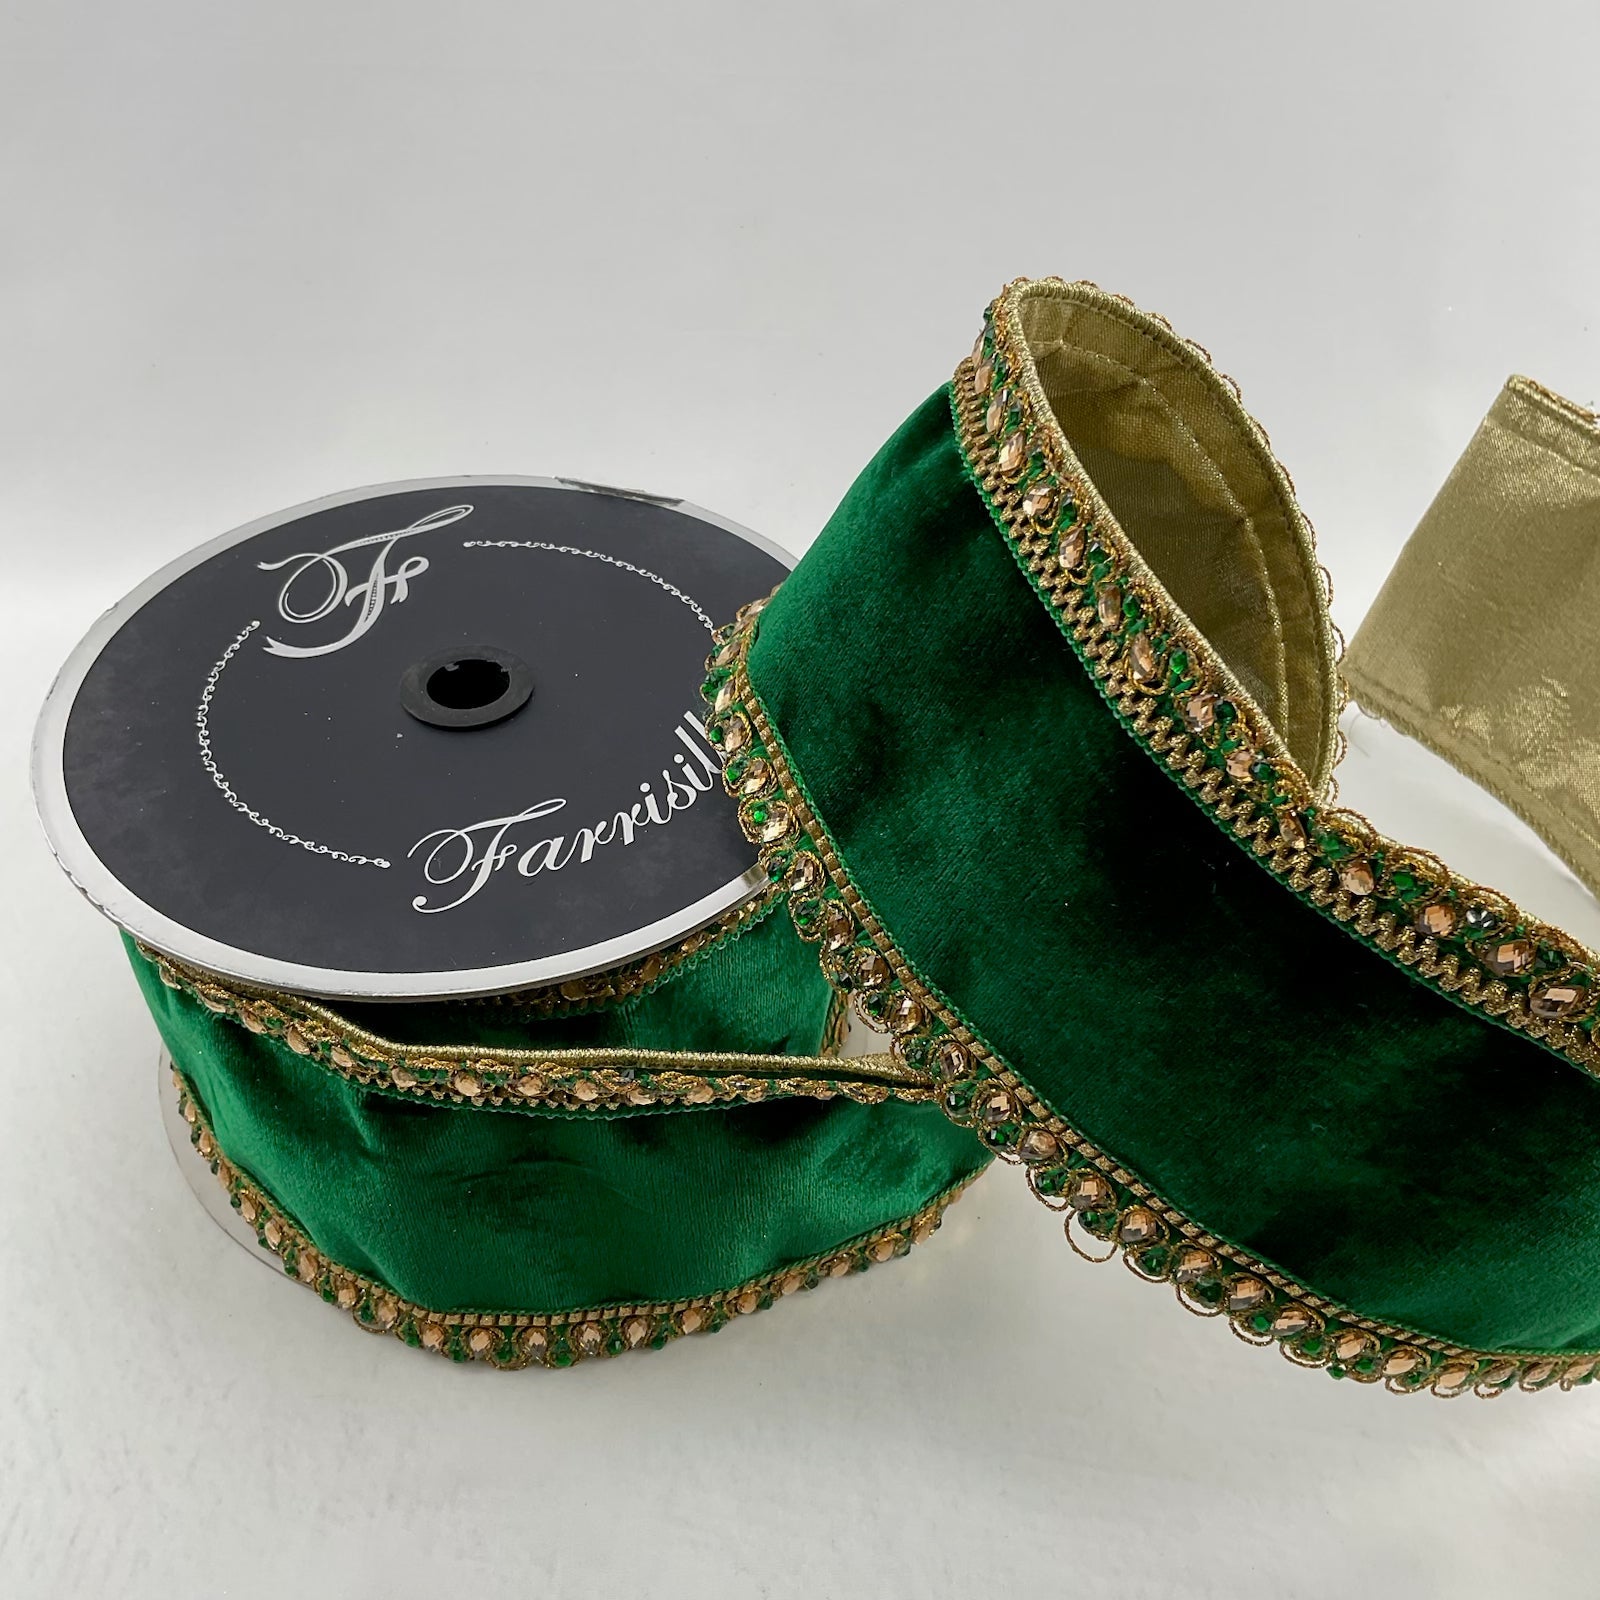 Regency Luxury 4x 10 yd Metallic Dot Velvet Wired Ribbon - Emerald Green/Gold